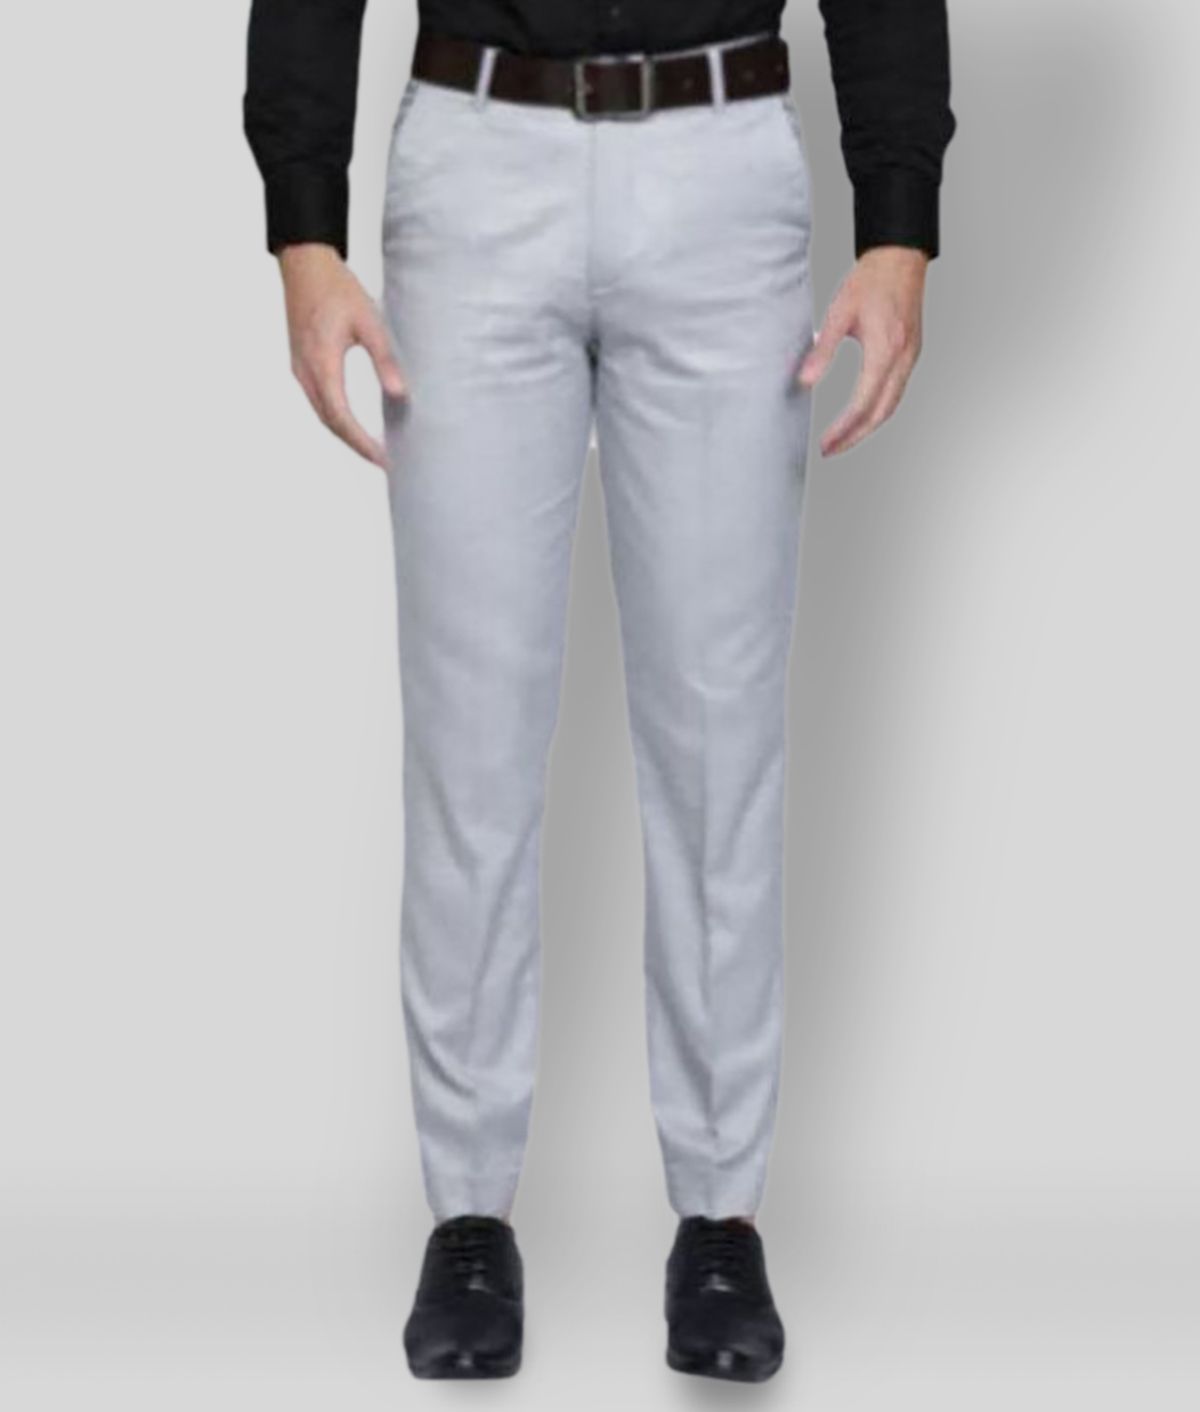     			Haul Chic - Light Grey Cotton Blend Slim Fit Men's Formal Pants (Pack of 1)